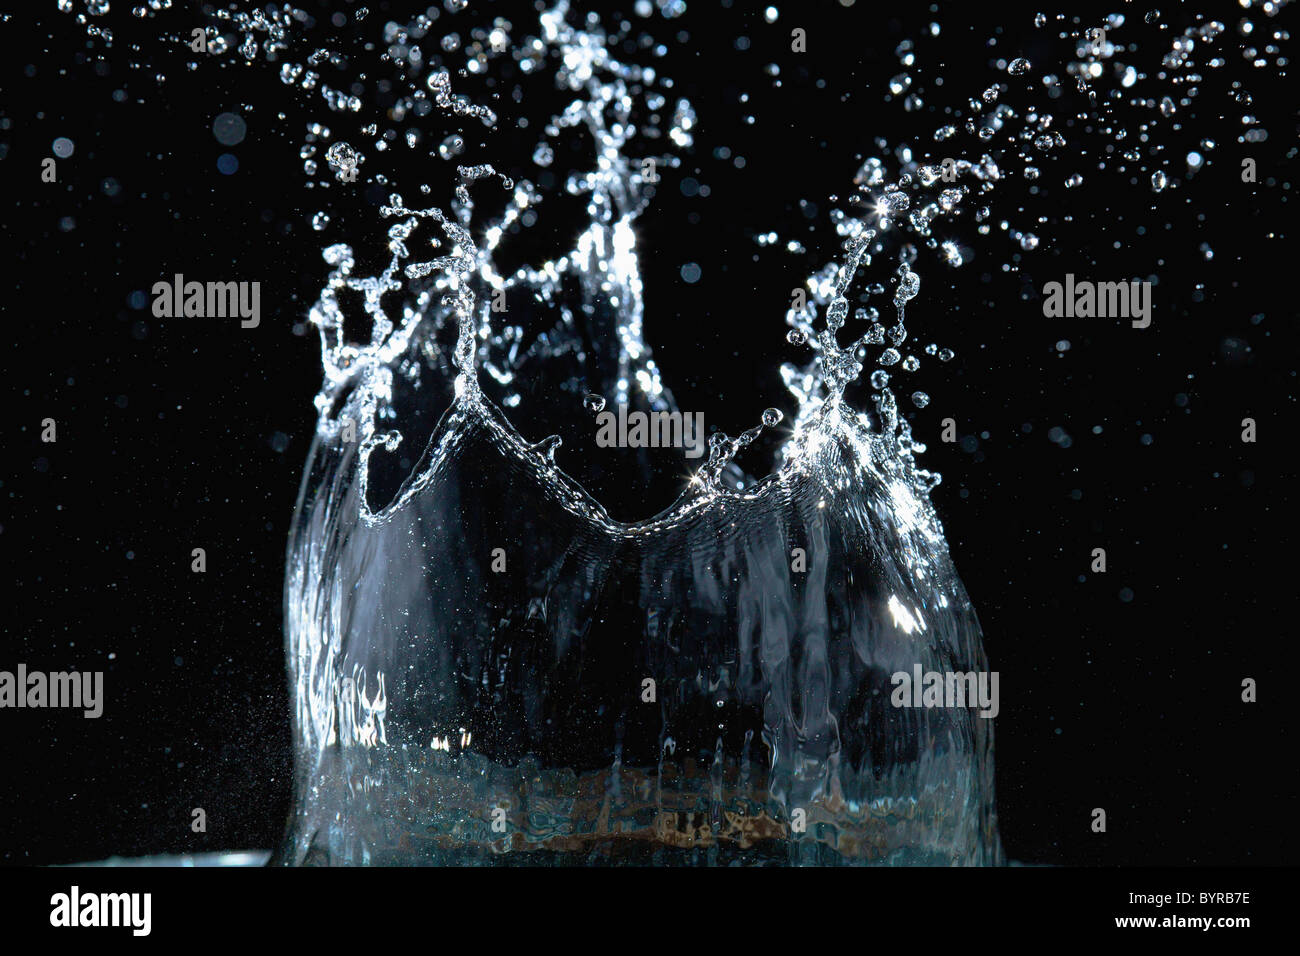 a drop of water landing and splashing Stock Photo